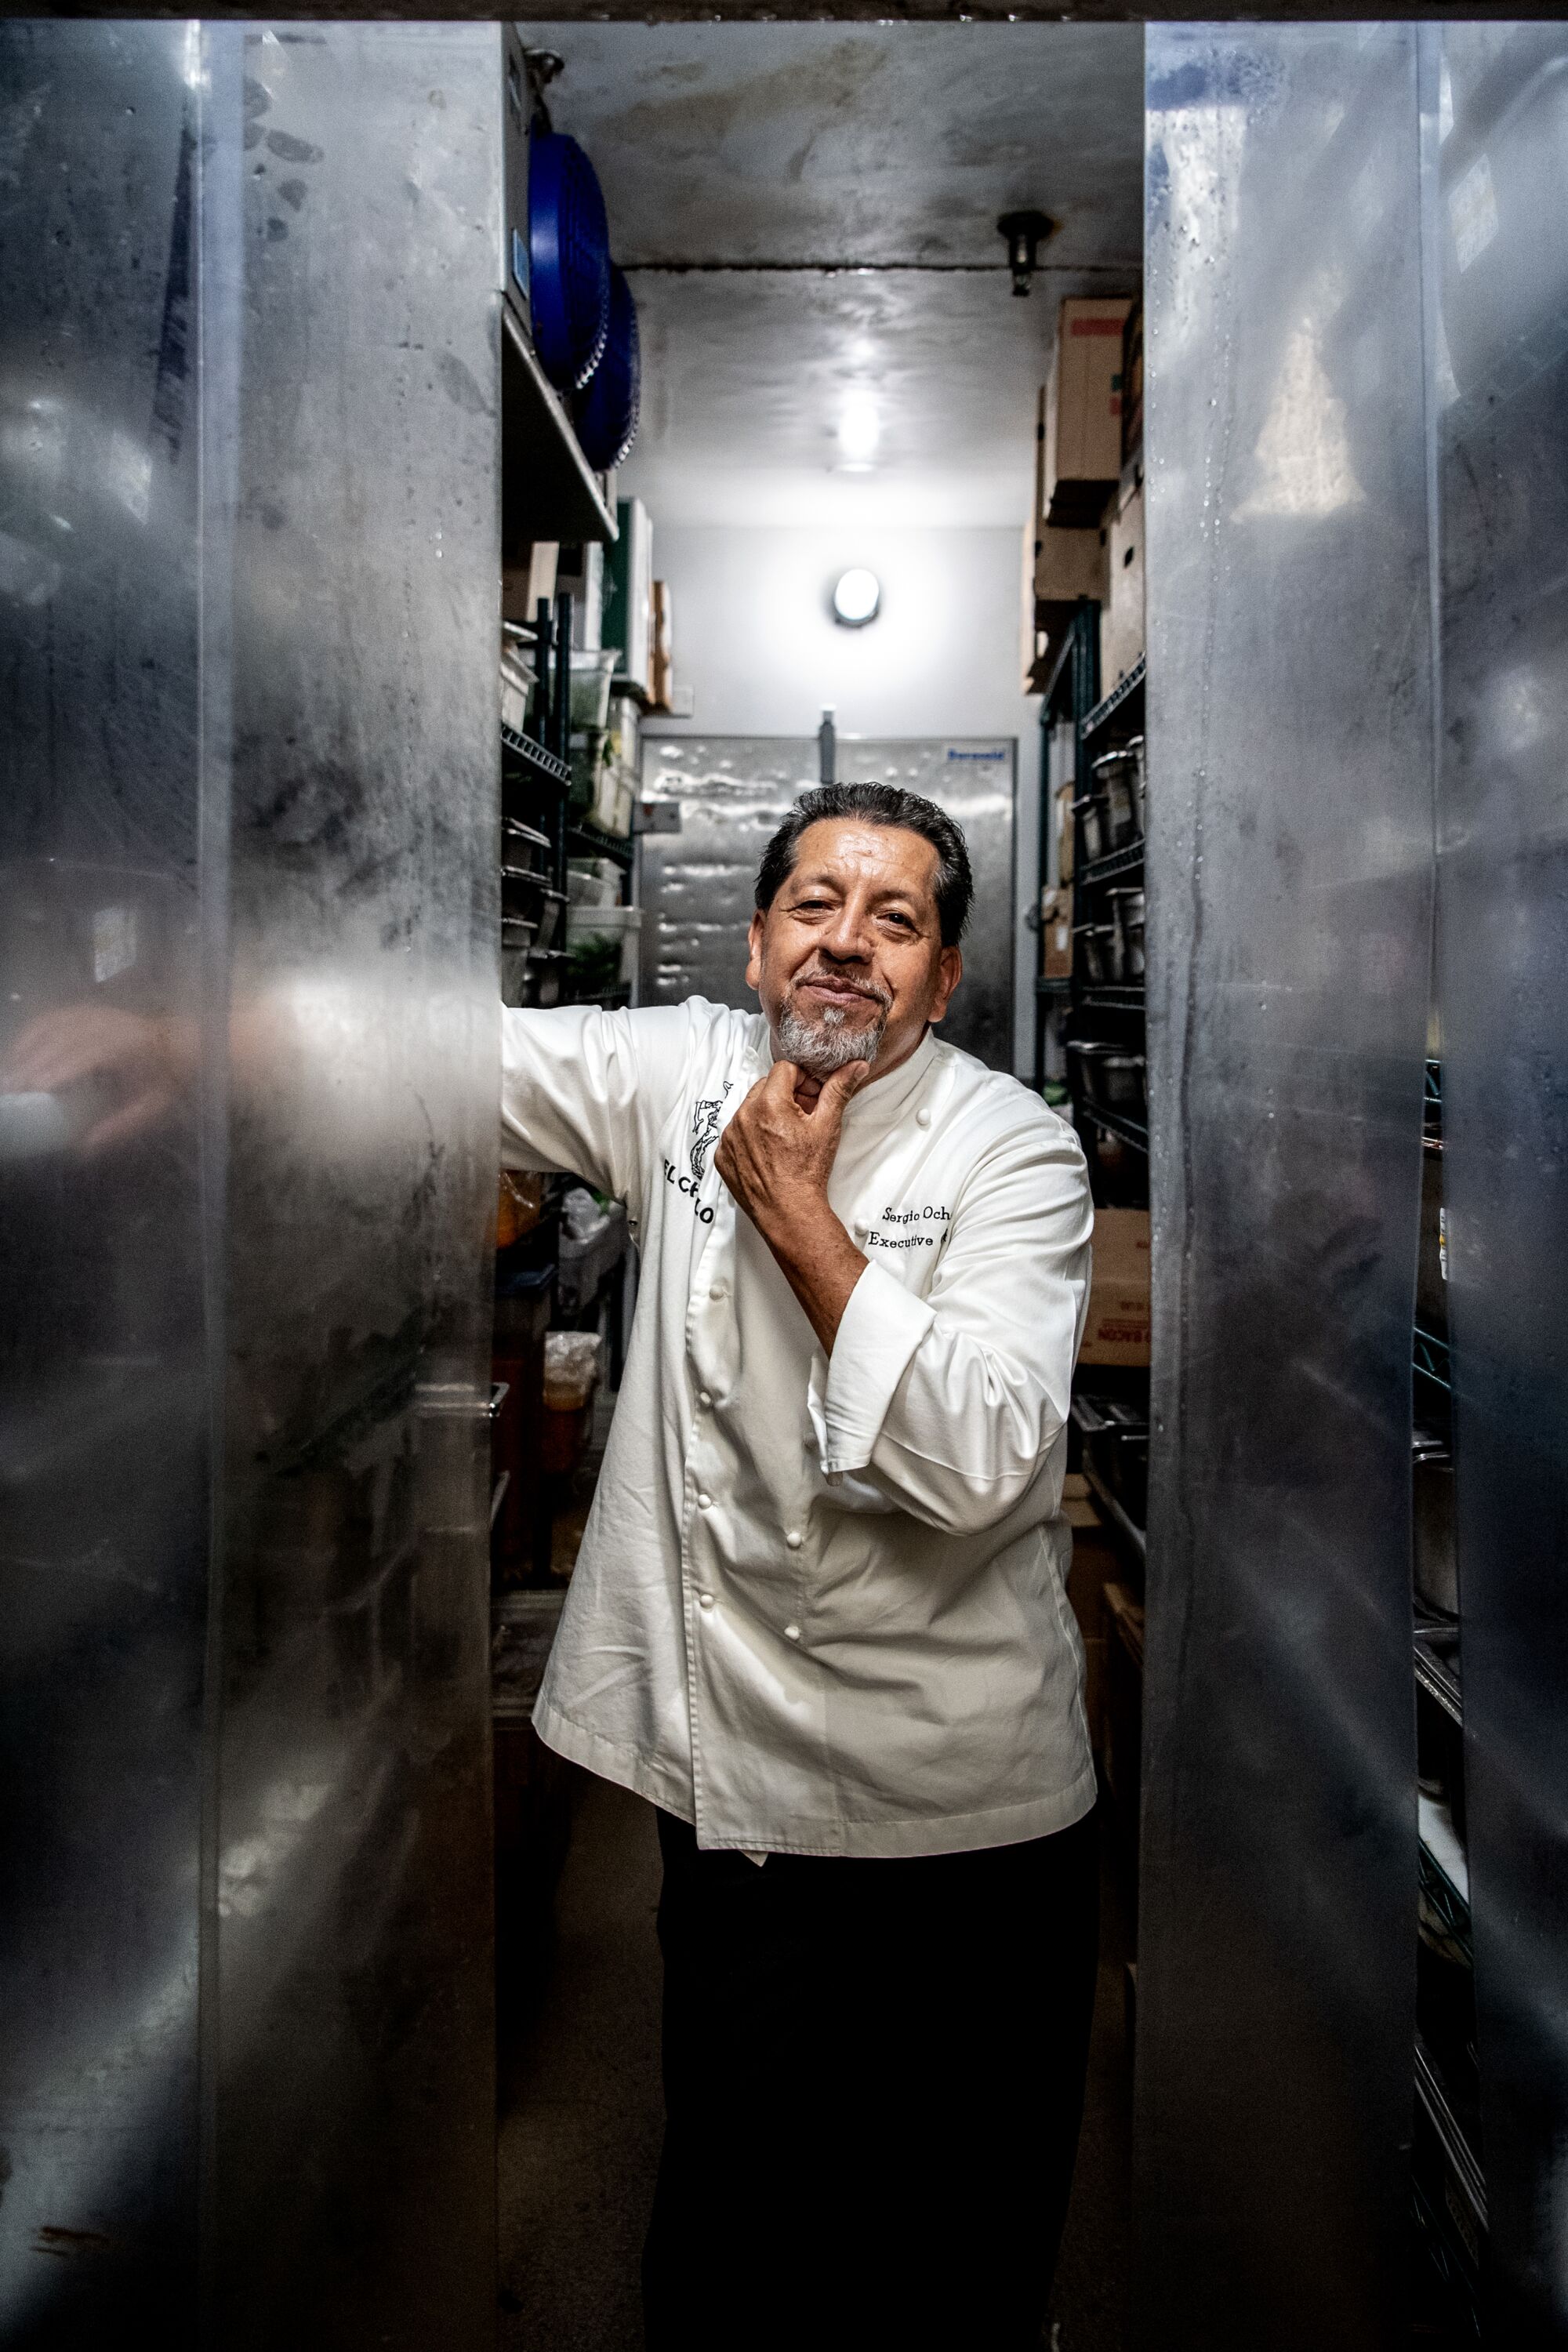 Sergio Ochoa standing in a kitchen.